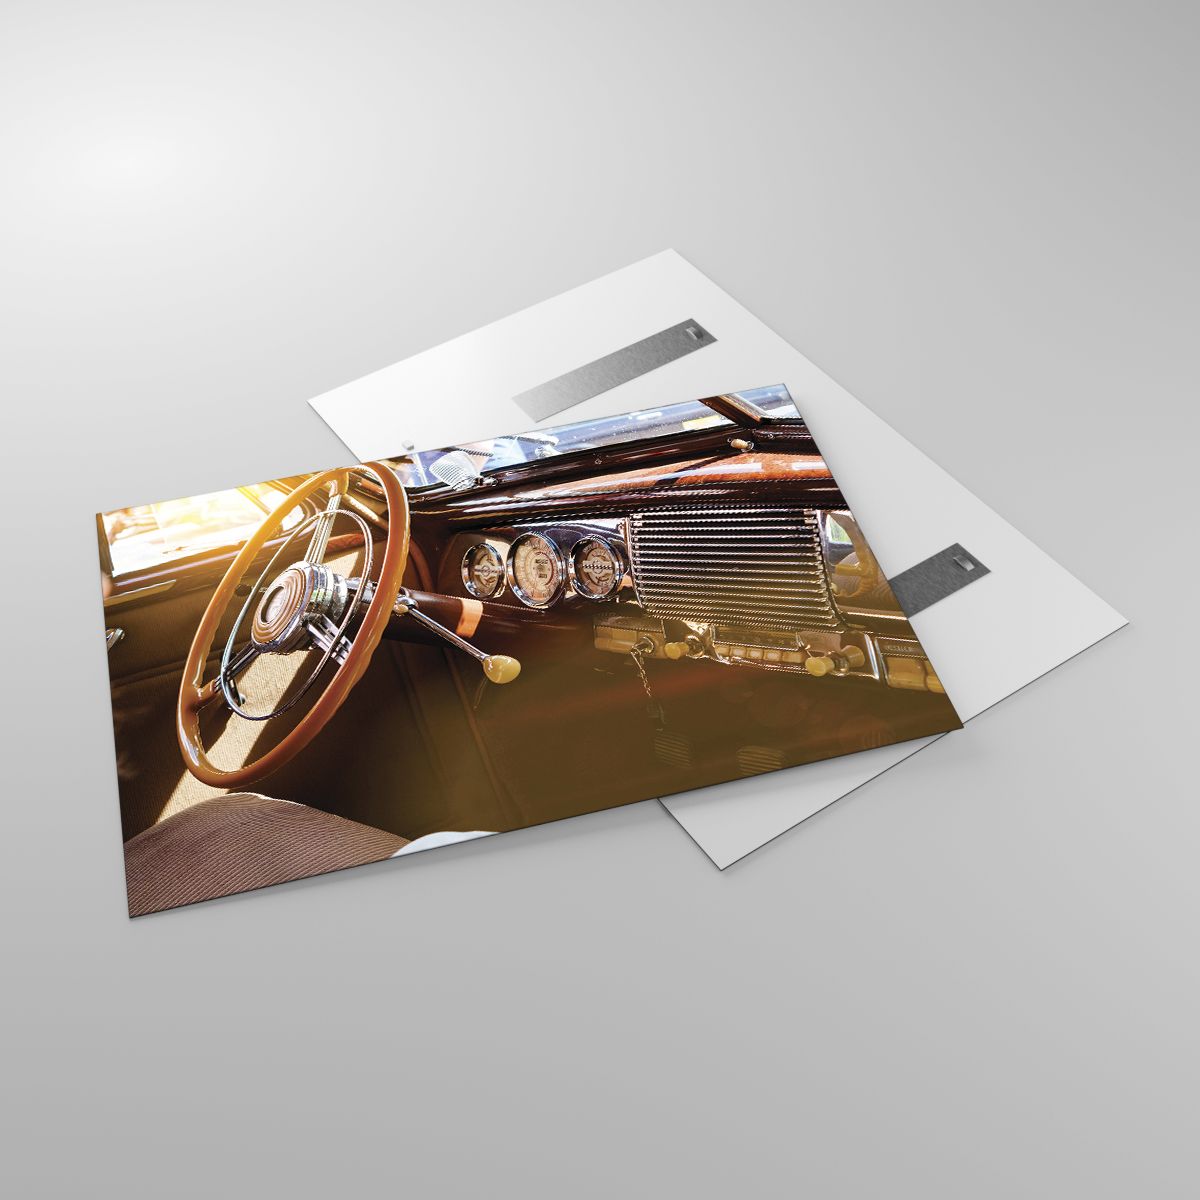 Glasbild Oldtimer, Glasbild Automobil, Glasbild Armaturenbrett, Glasbild Reise, Glasbild Retro